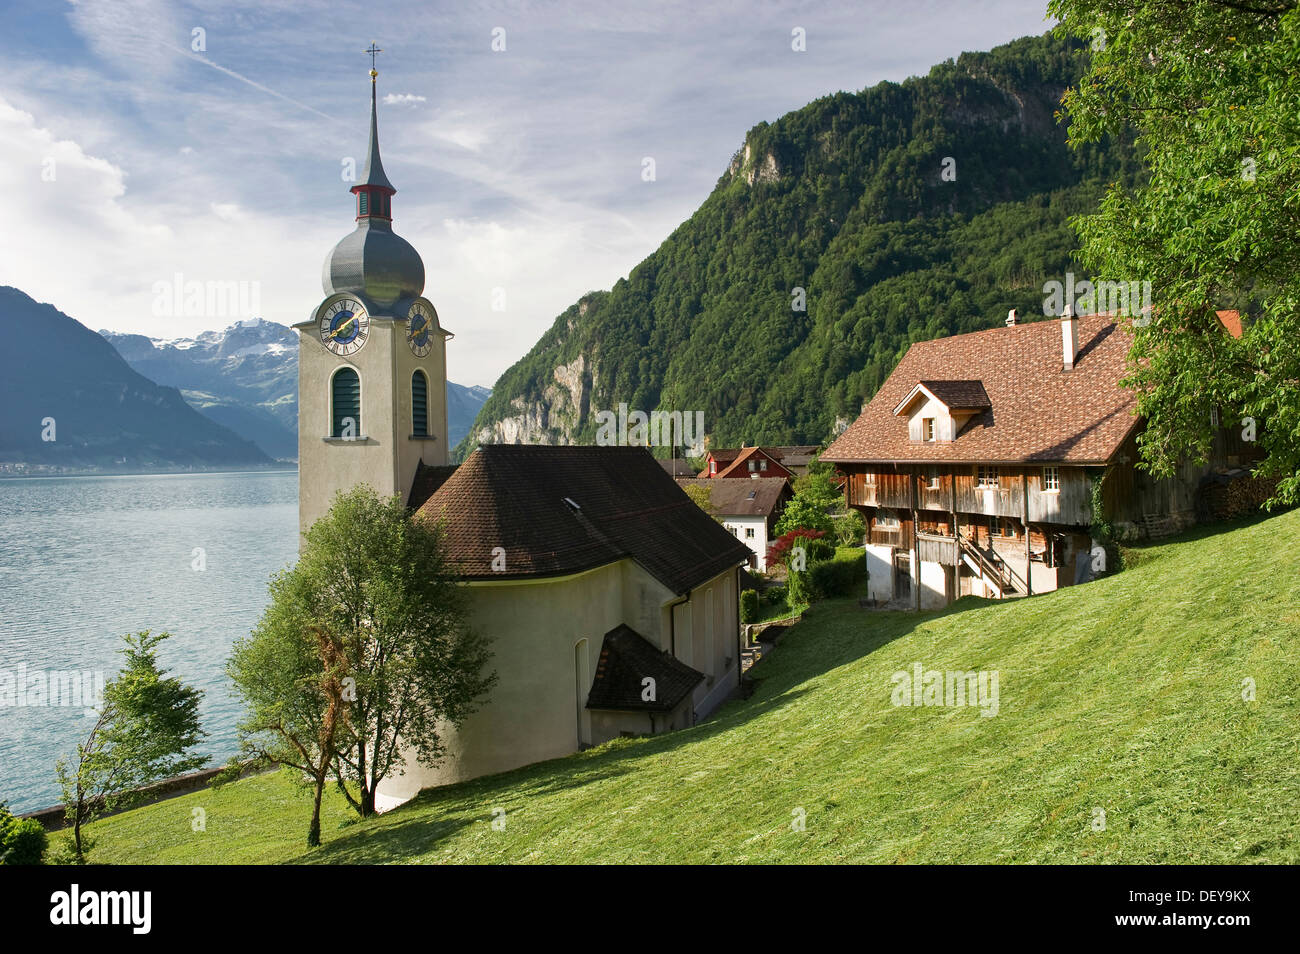 Village of Bauern, Urnersee lake, Lake Lucerne, Canton of Uri, Switzerland, Europe Stock Photo